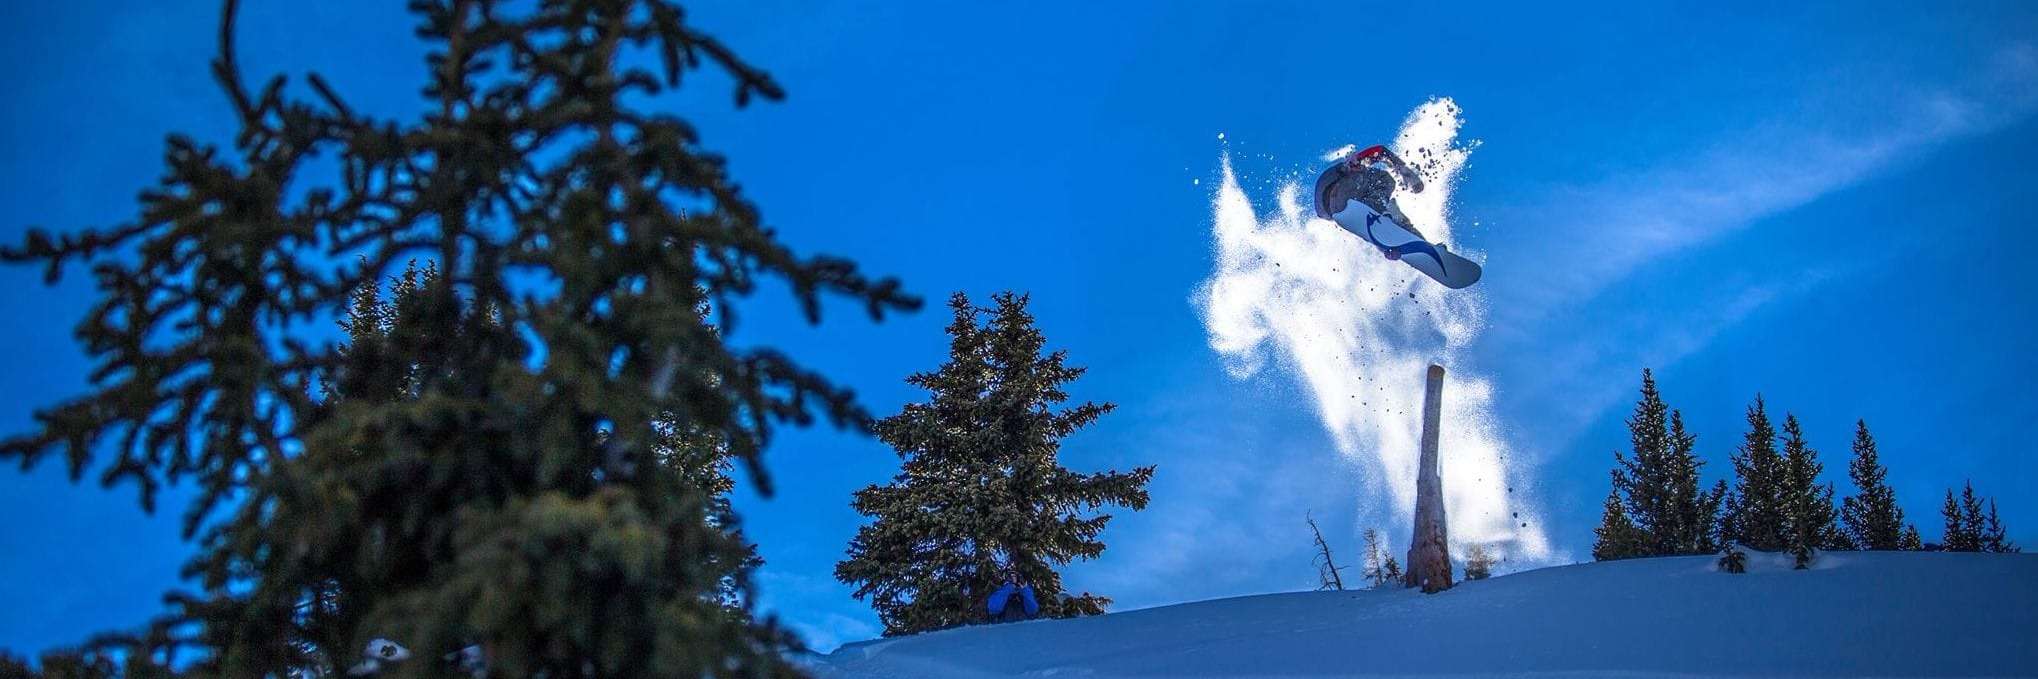 Snowboarder getting air